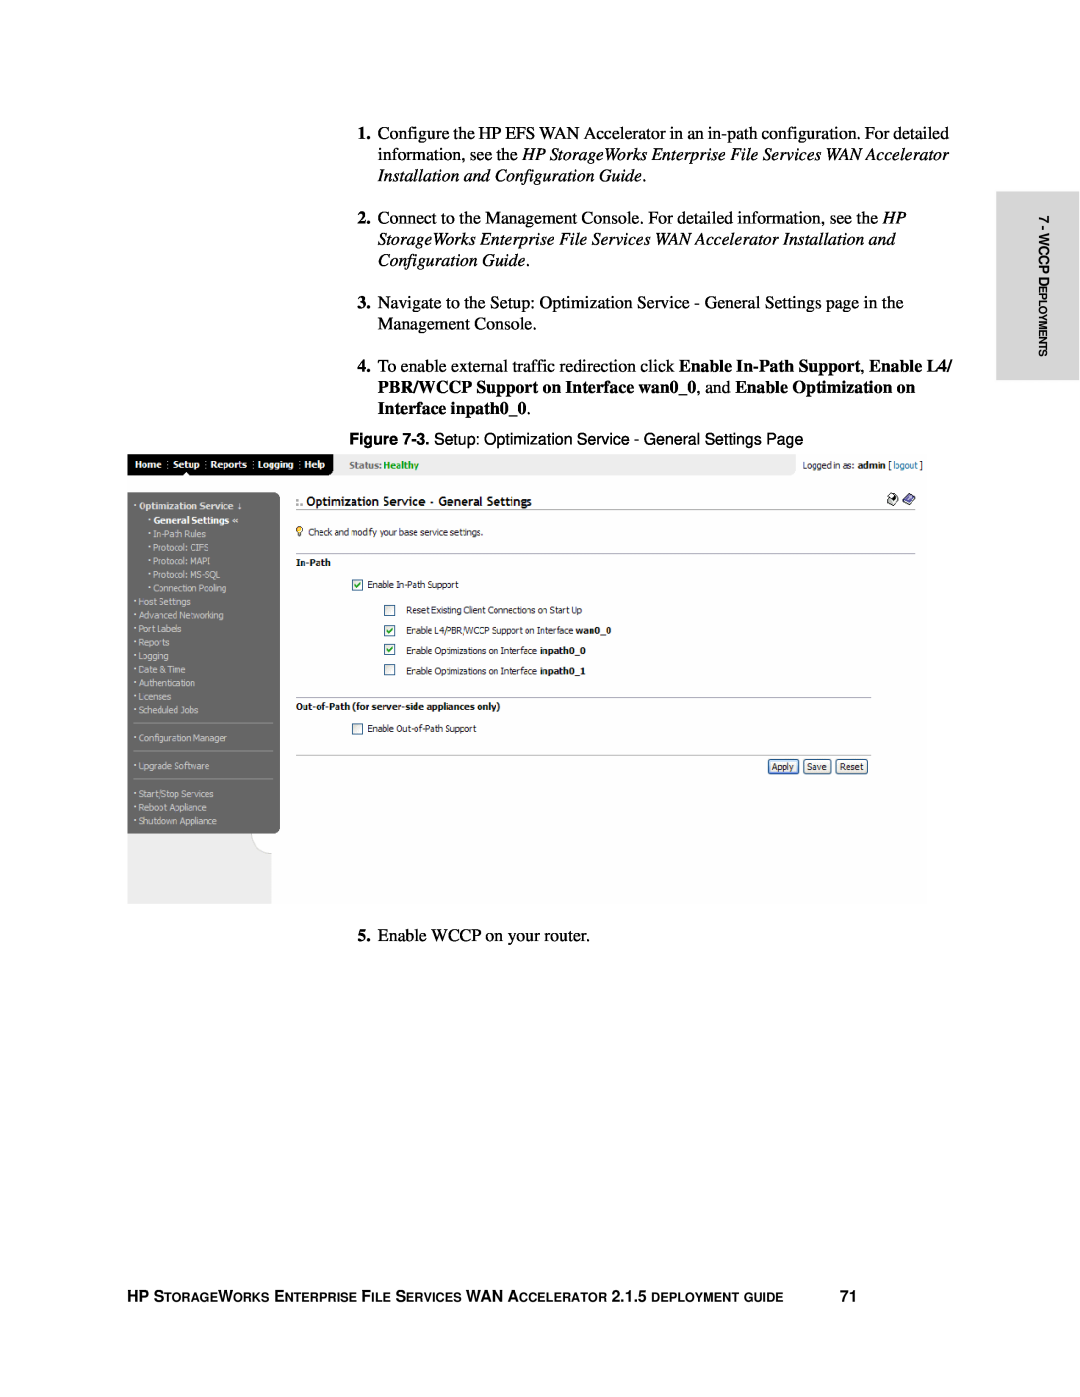 HP Enterprise File Services WAN Accelerator manual 3. Setup Optimization Service - General Settings Page 